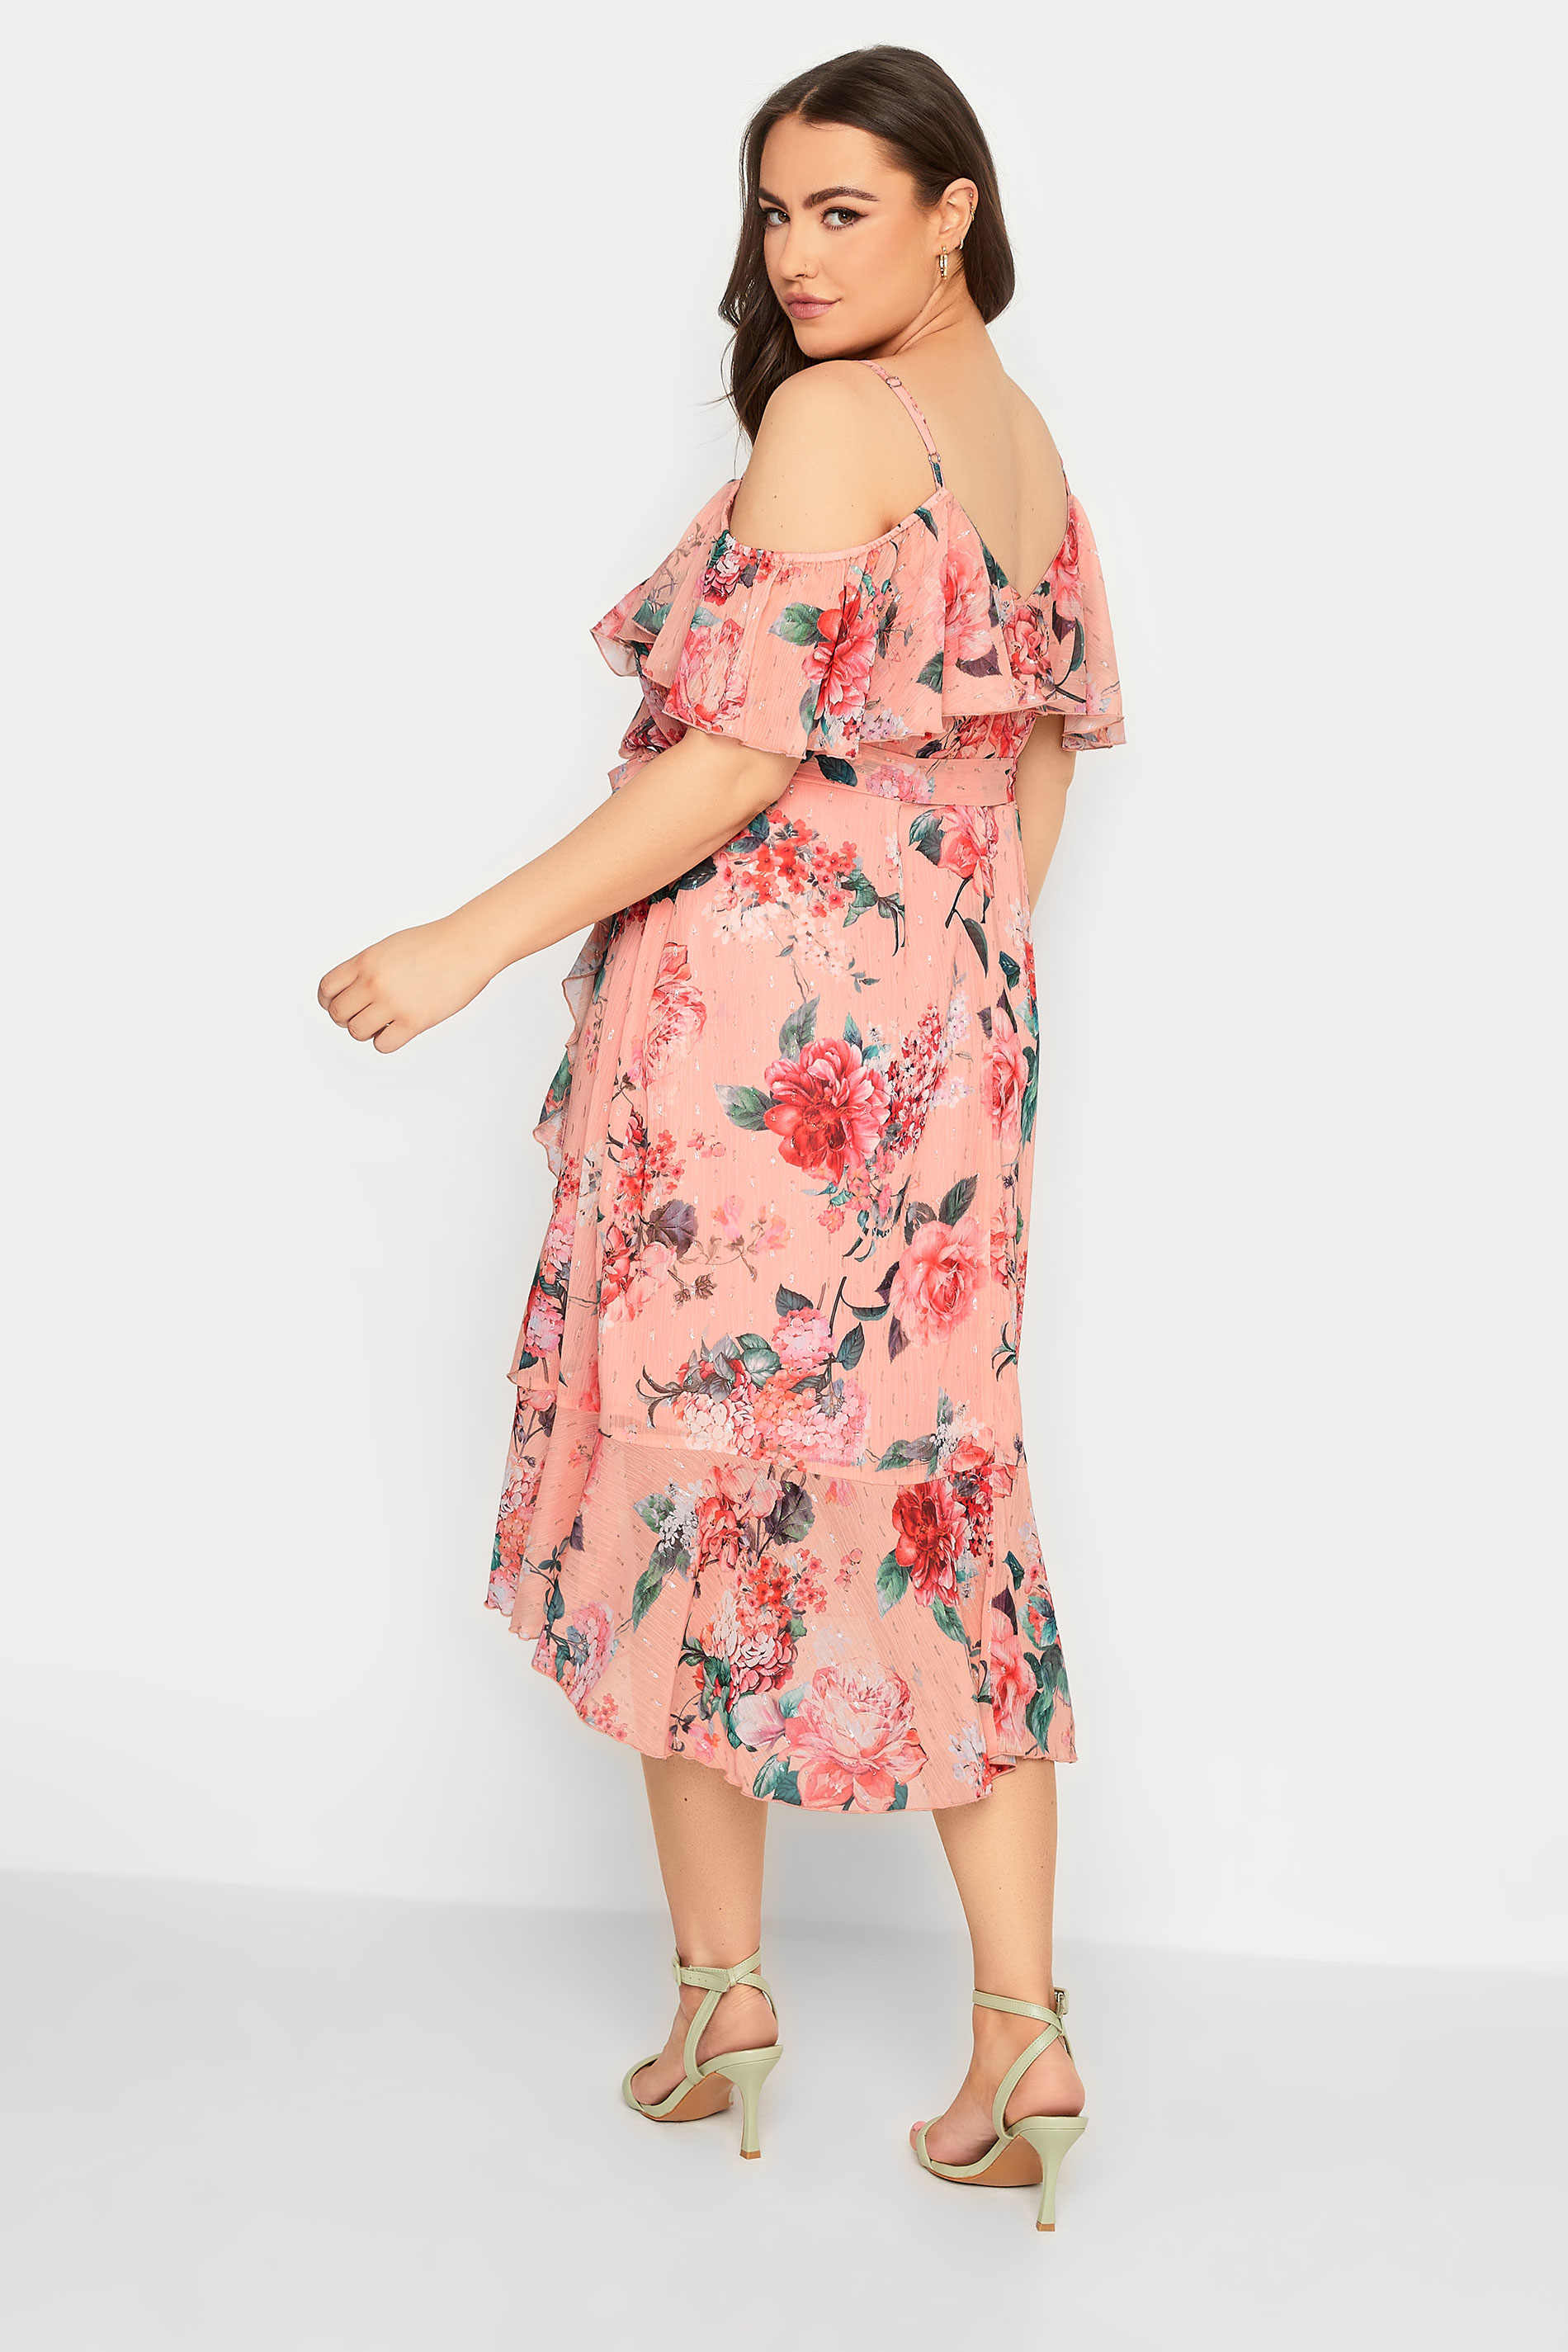 YOURS LONDON Curve Plus Size Pink Cold Shoulder Floral Wrap Dress | Yours Clothing  3